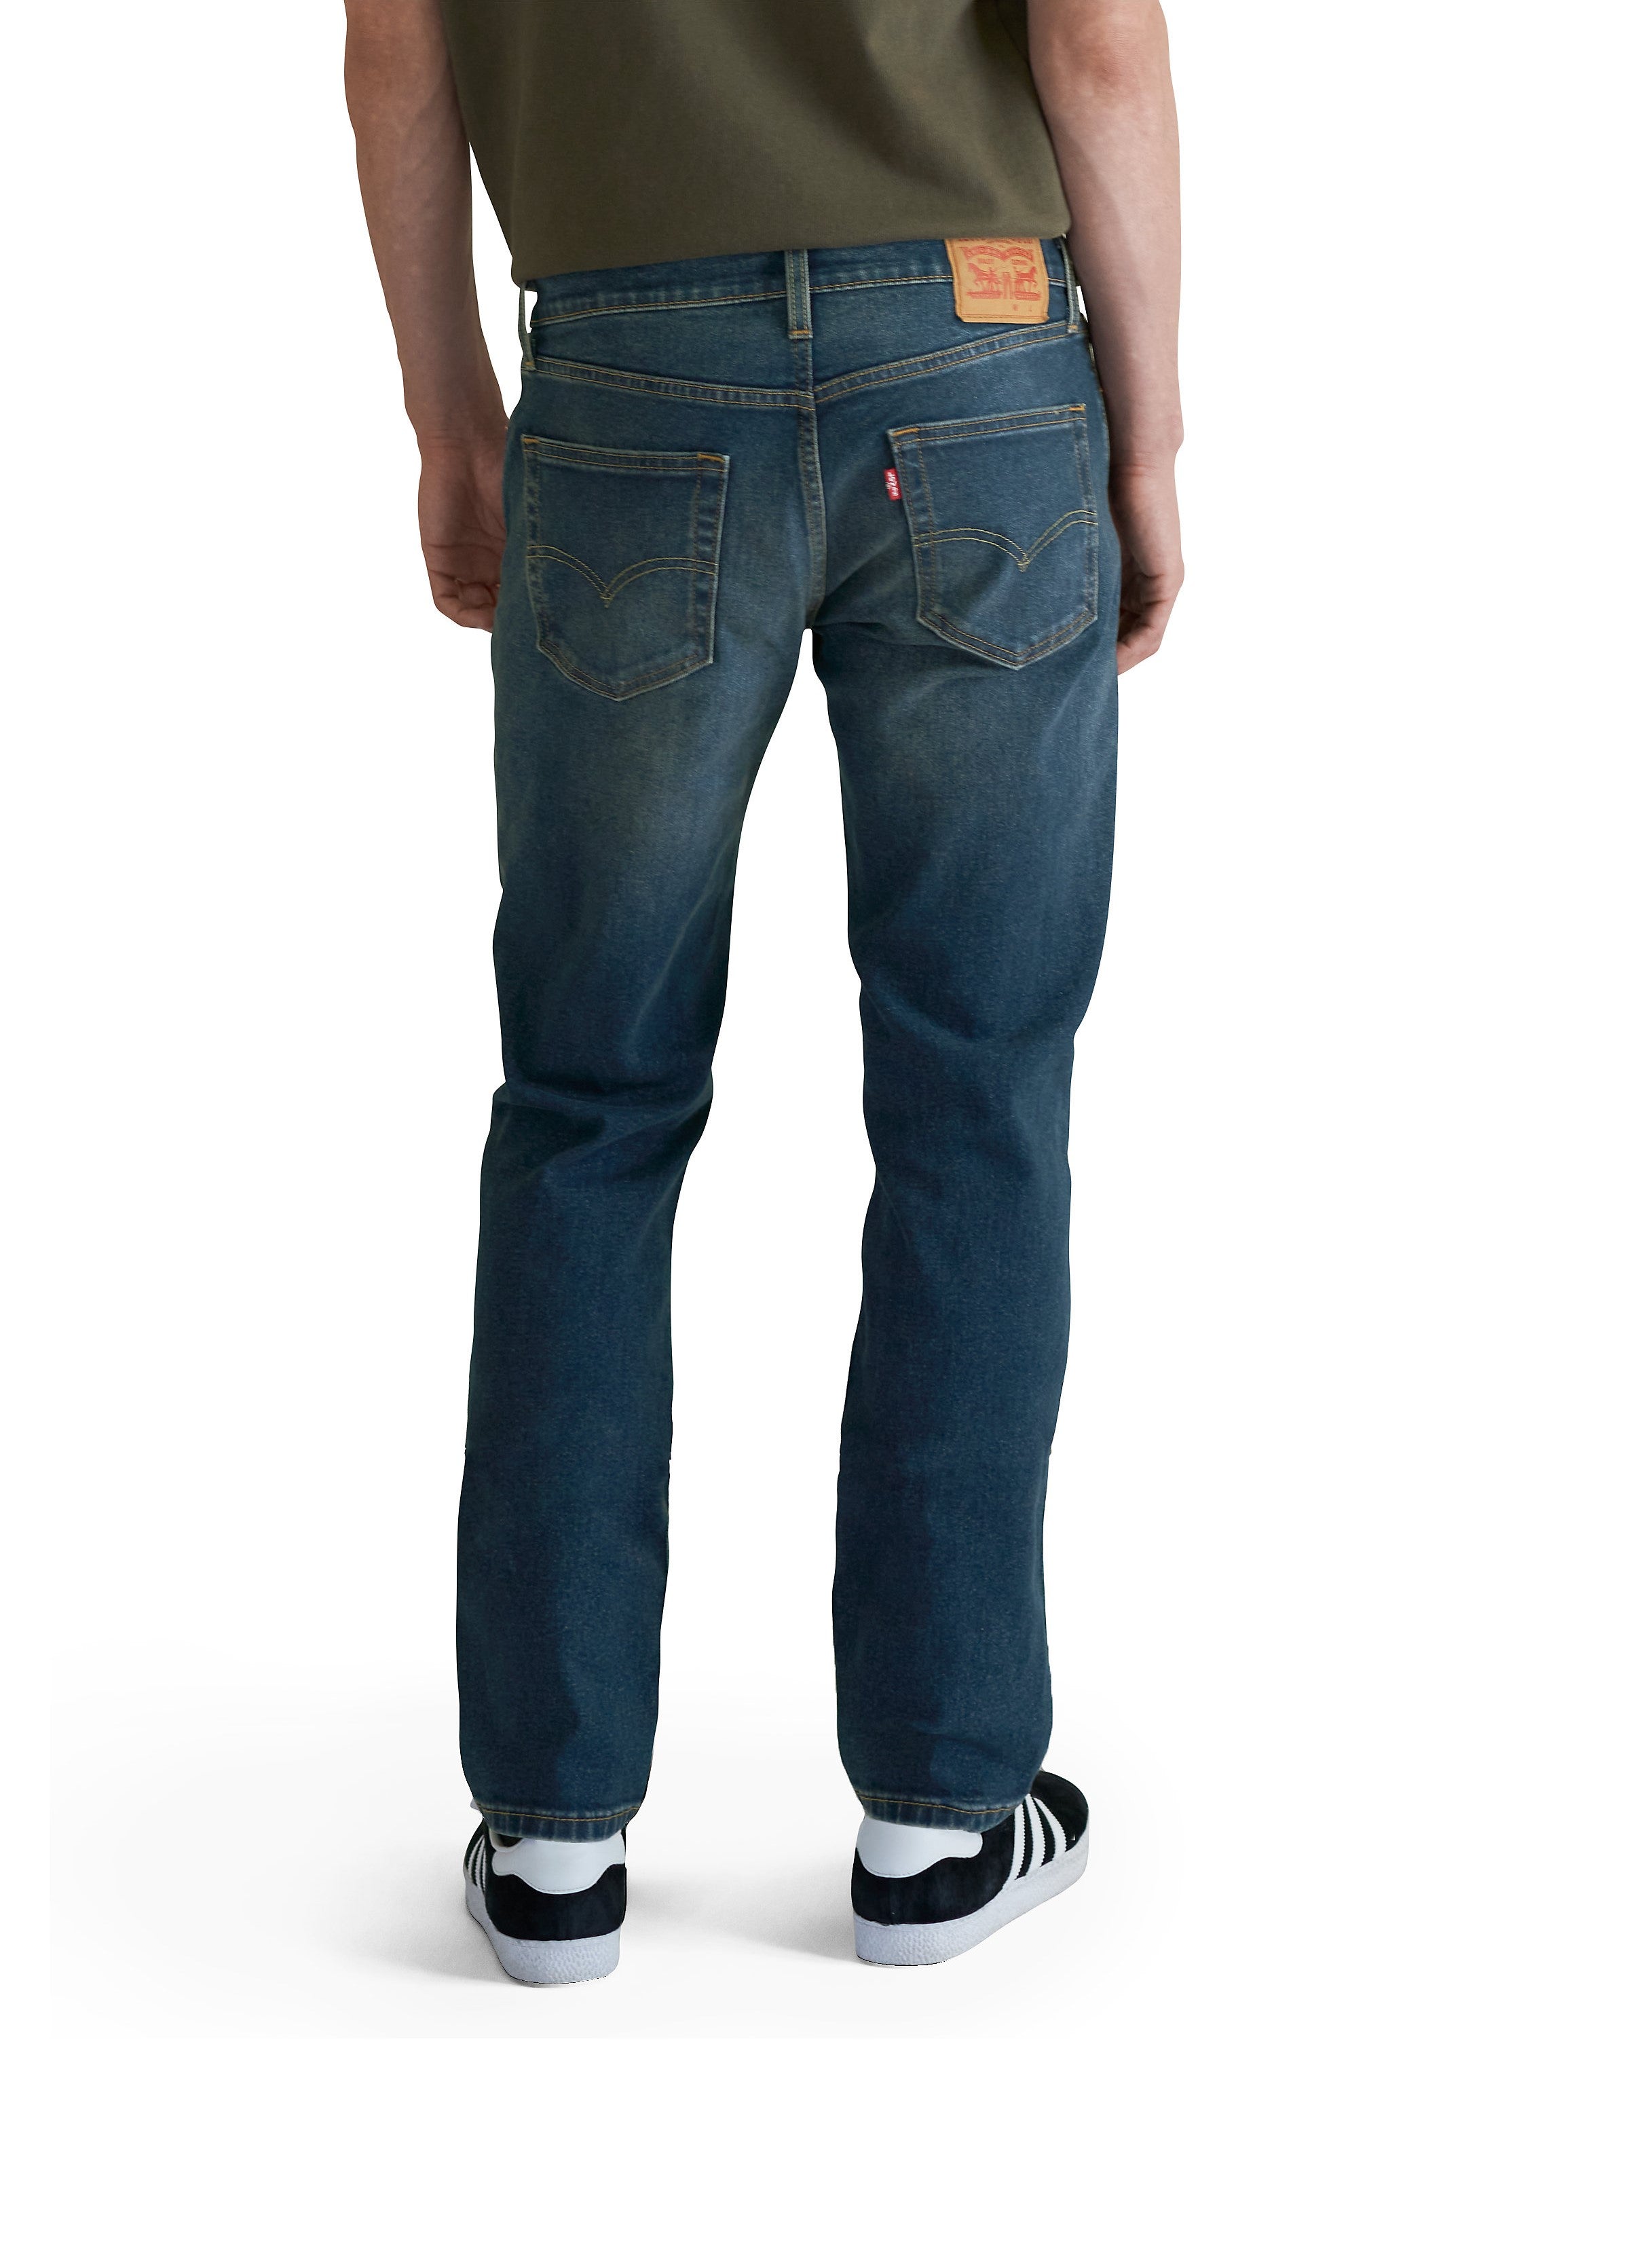 pantalones-jeans-levis-511-slim-crazy-p-caballero